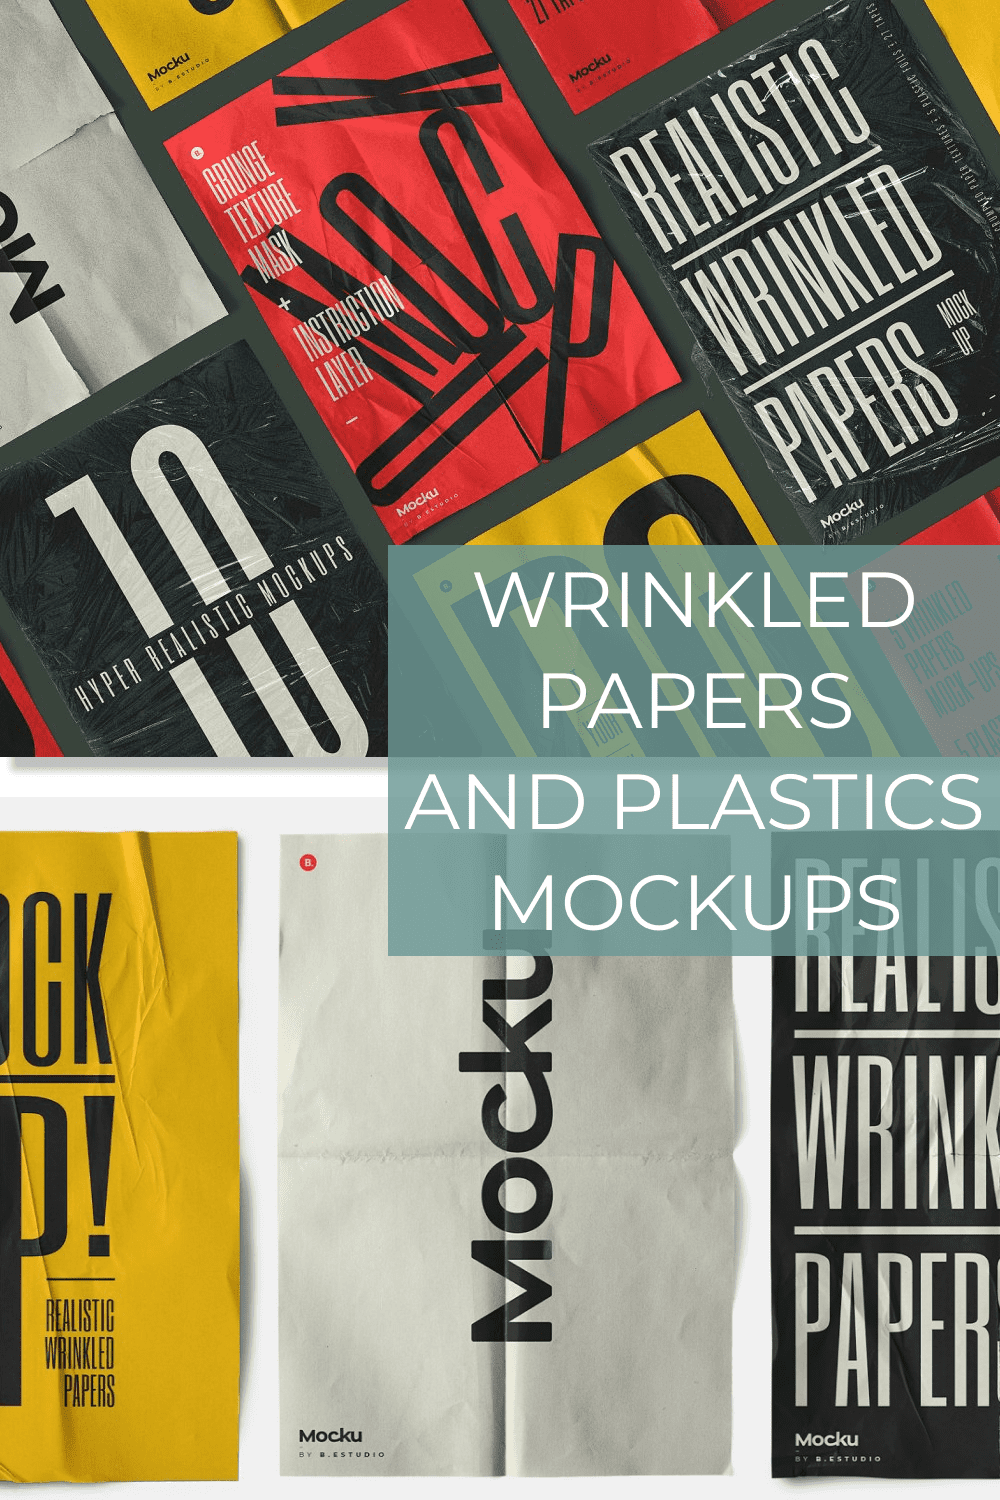 Wrinkled Papers and Plastics Mockups pinterest image.